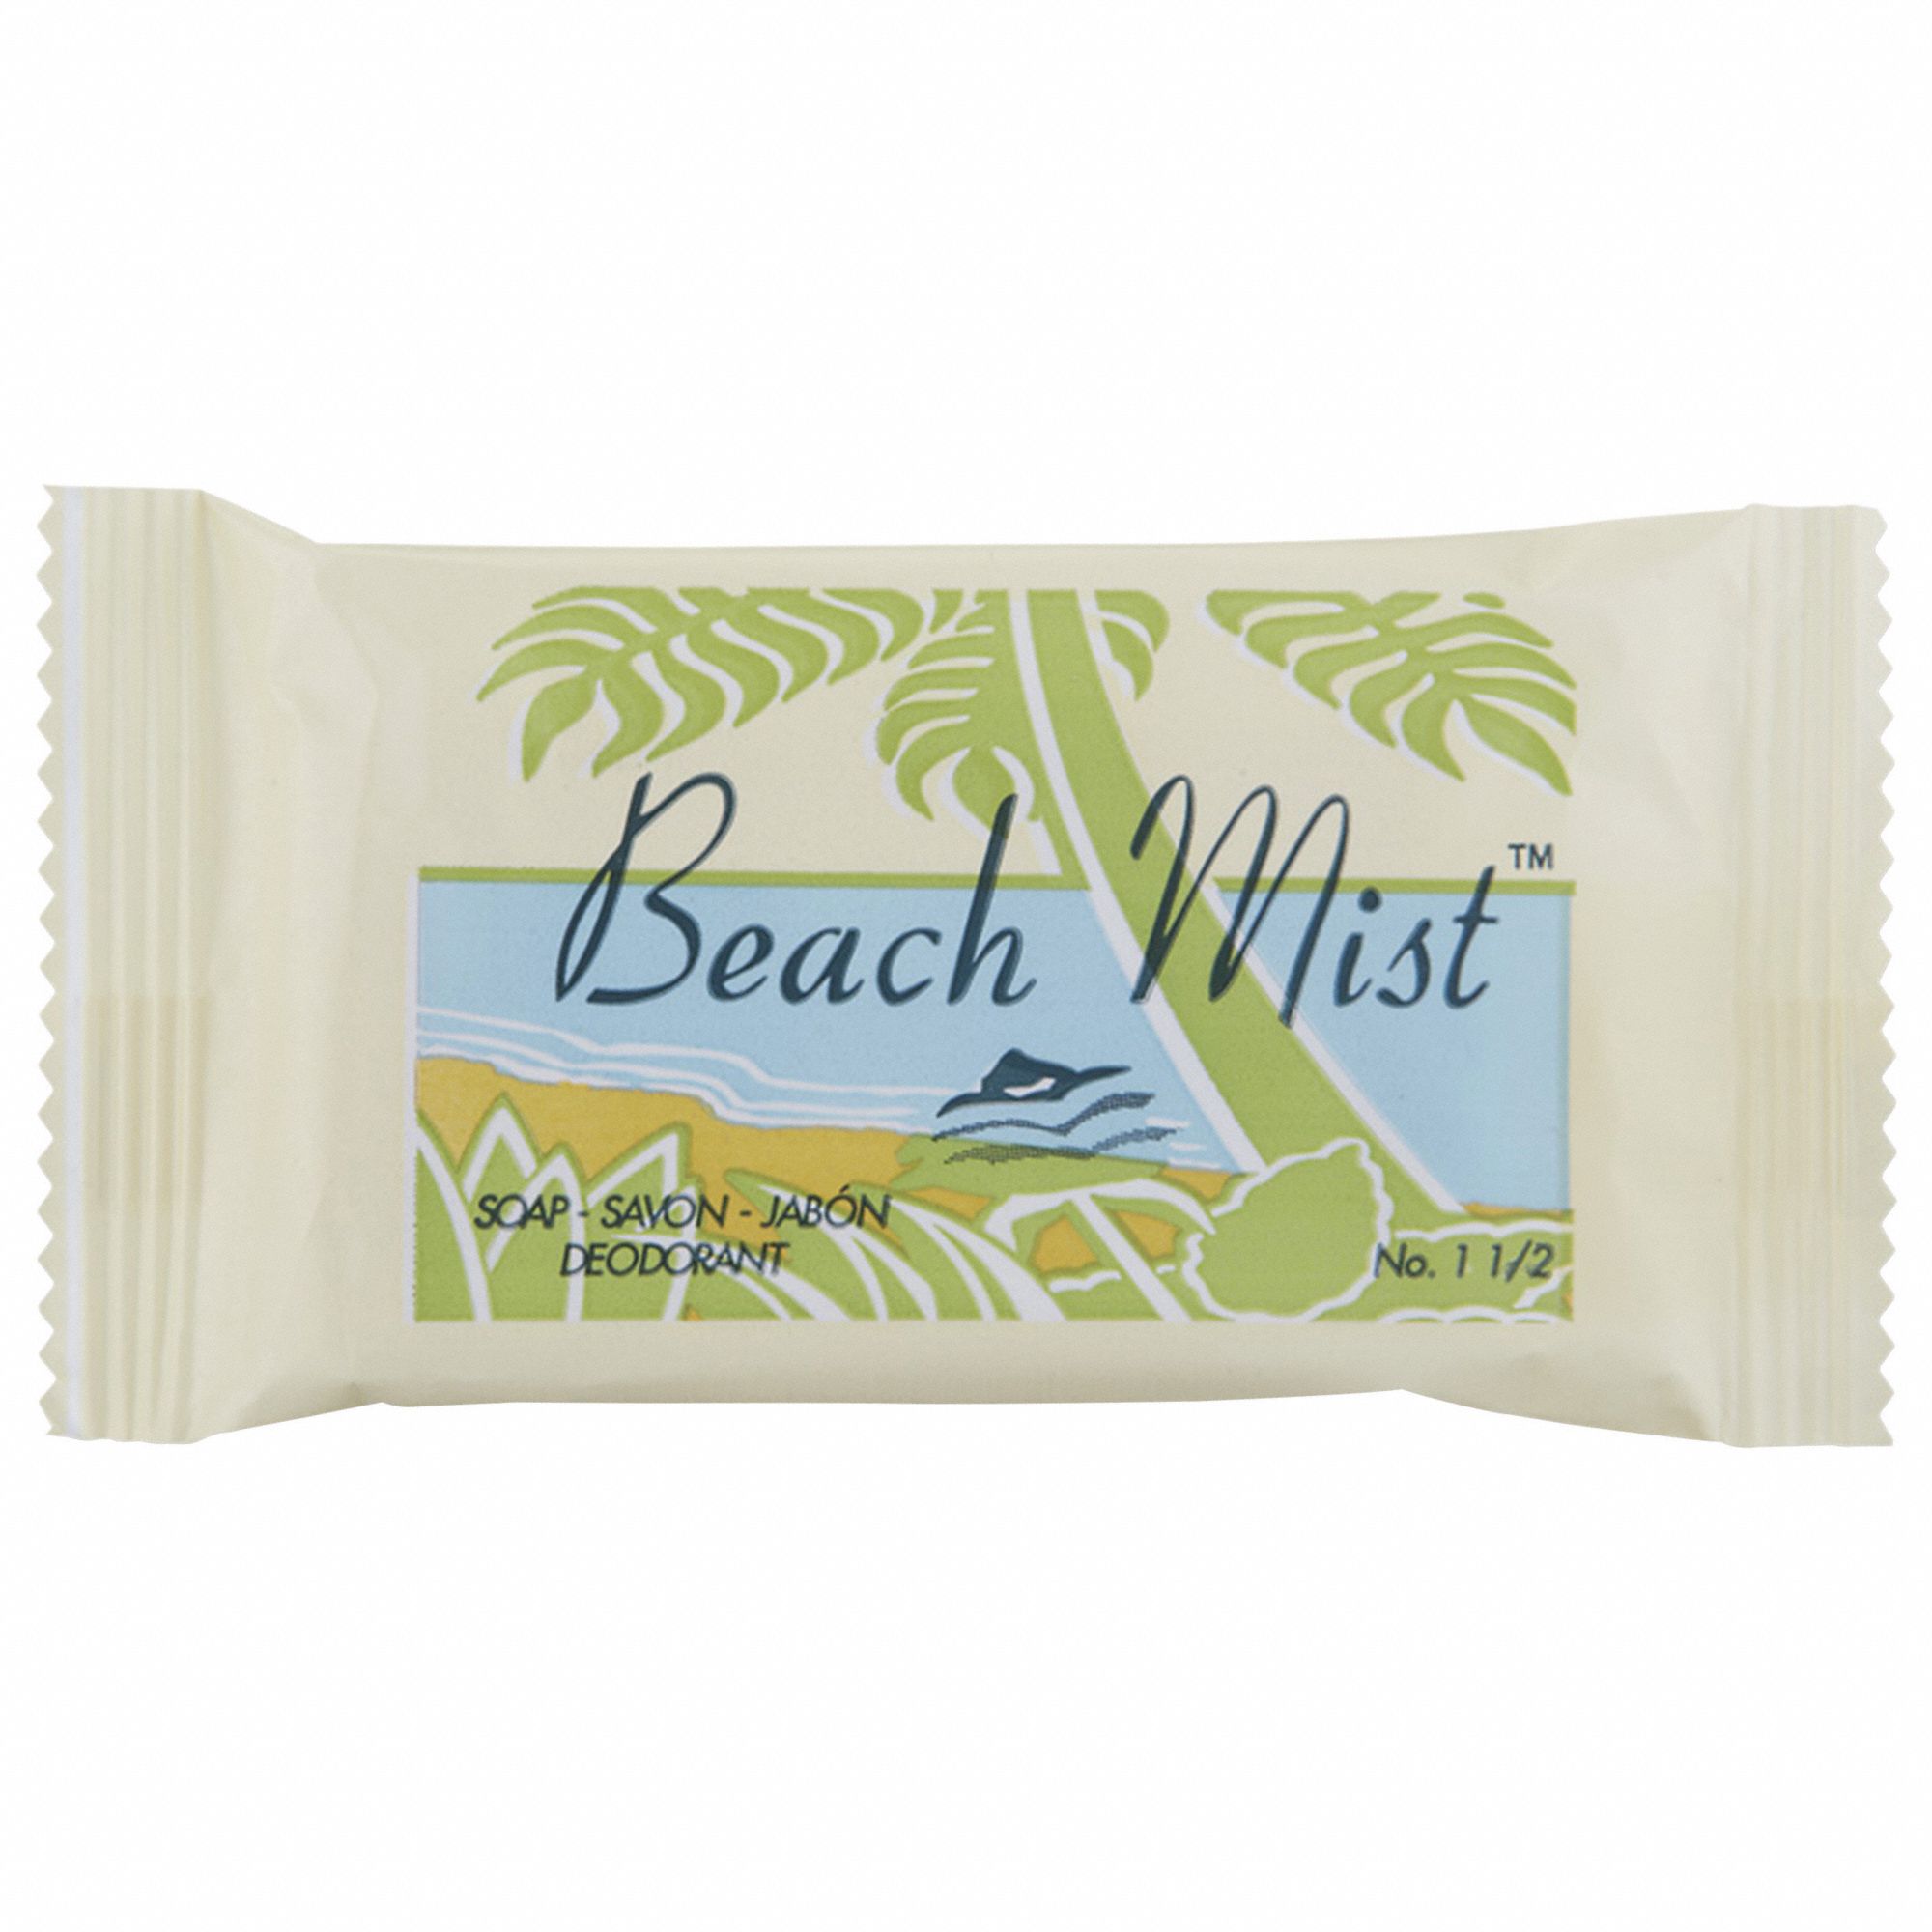 Body Soap: Beachmist, #1-1/2, Wrapped, Fresh, Deodorant, 500 PK